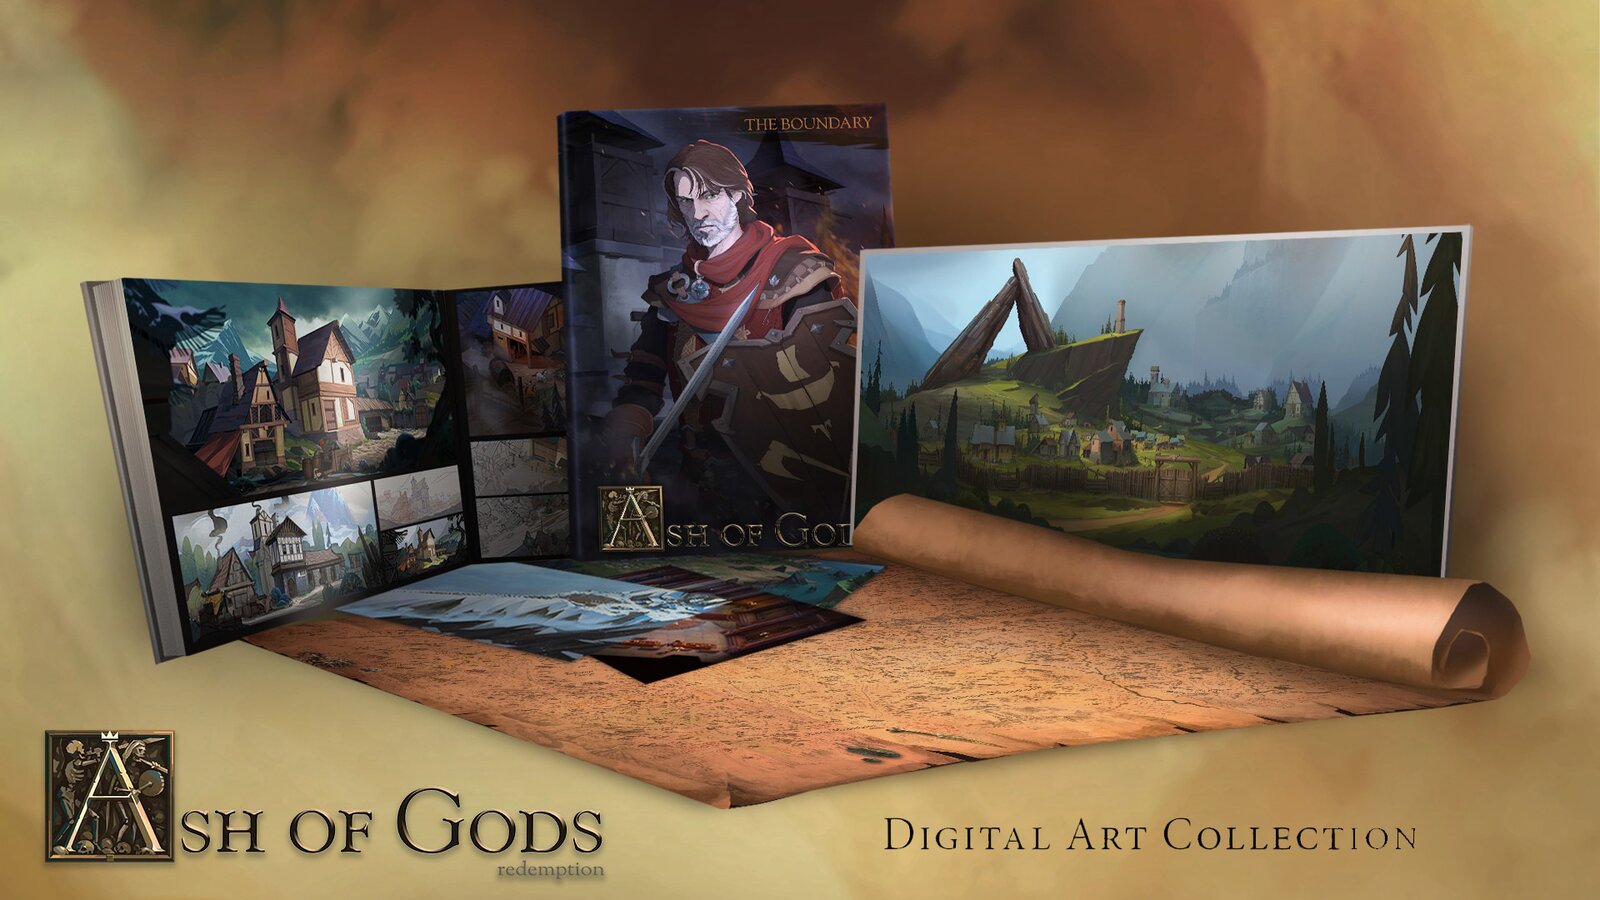 Ash of Gods: Redemption - Digital Art Collection